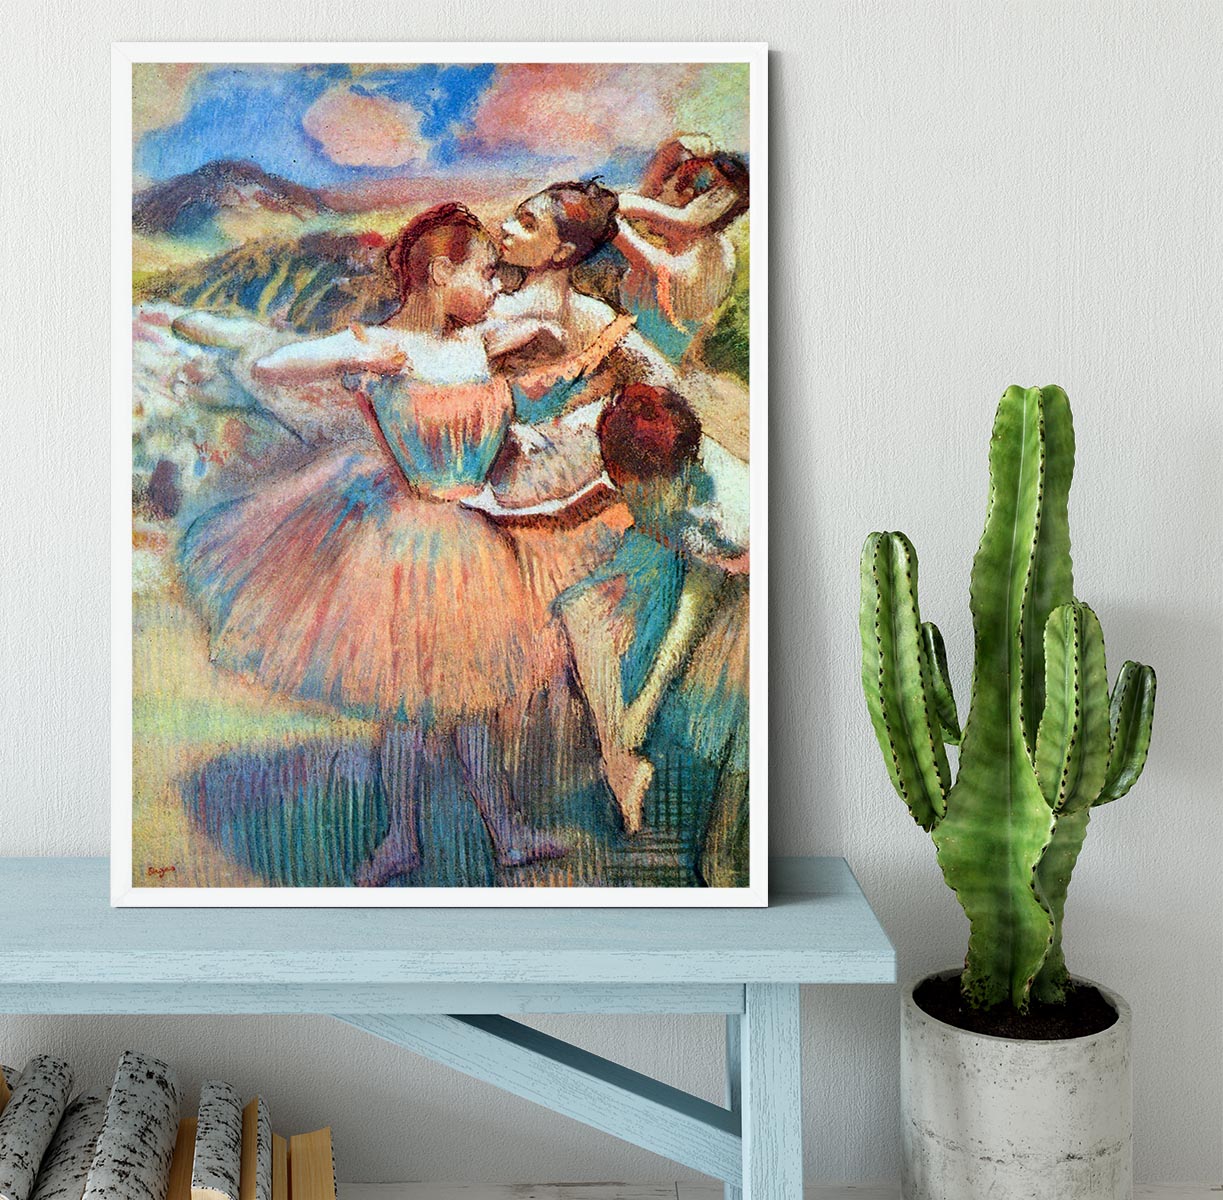 Dancers in the landscape by Degas Framed Print - Canvas Art Rocks -6